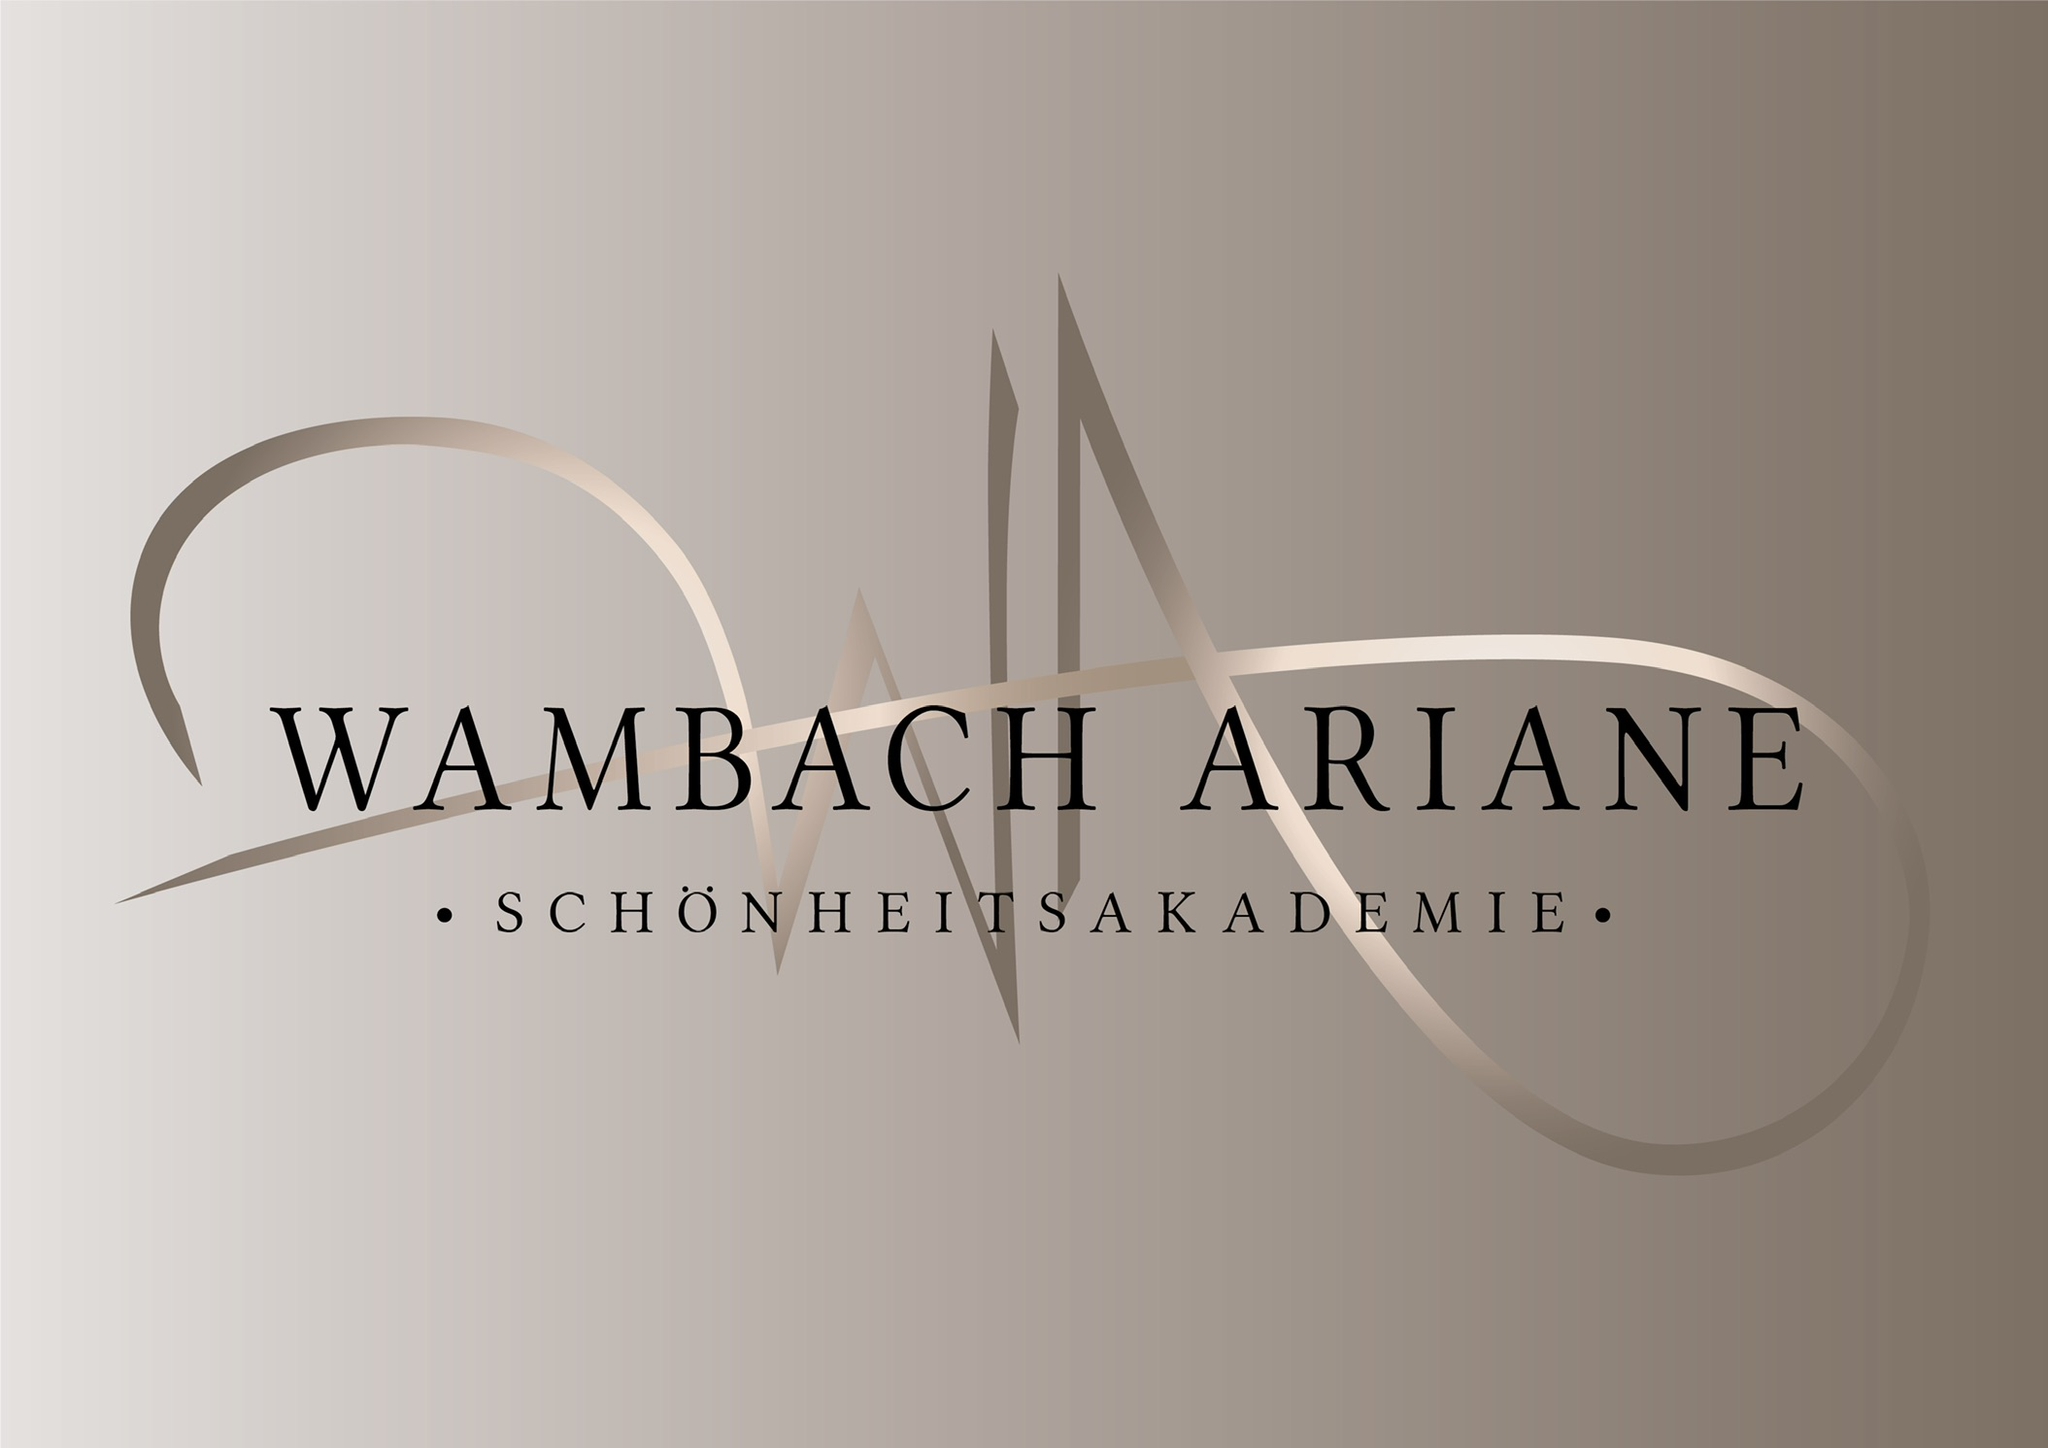 Wambach Ariane